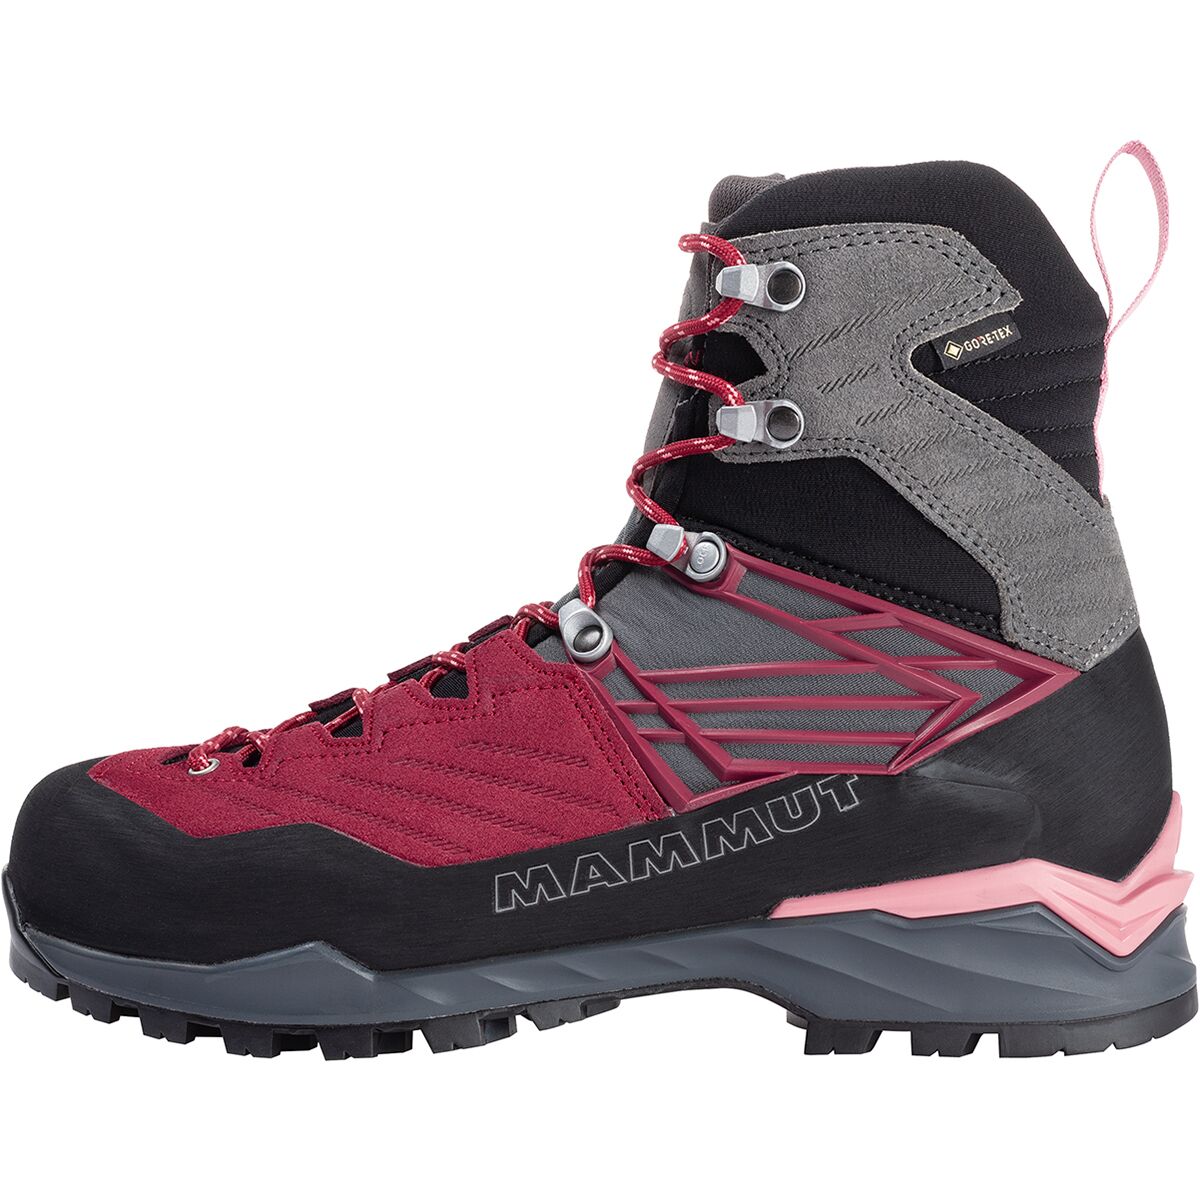 Kento Pro High GTX Mountaineering Boot - Women